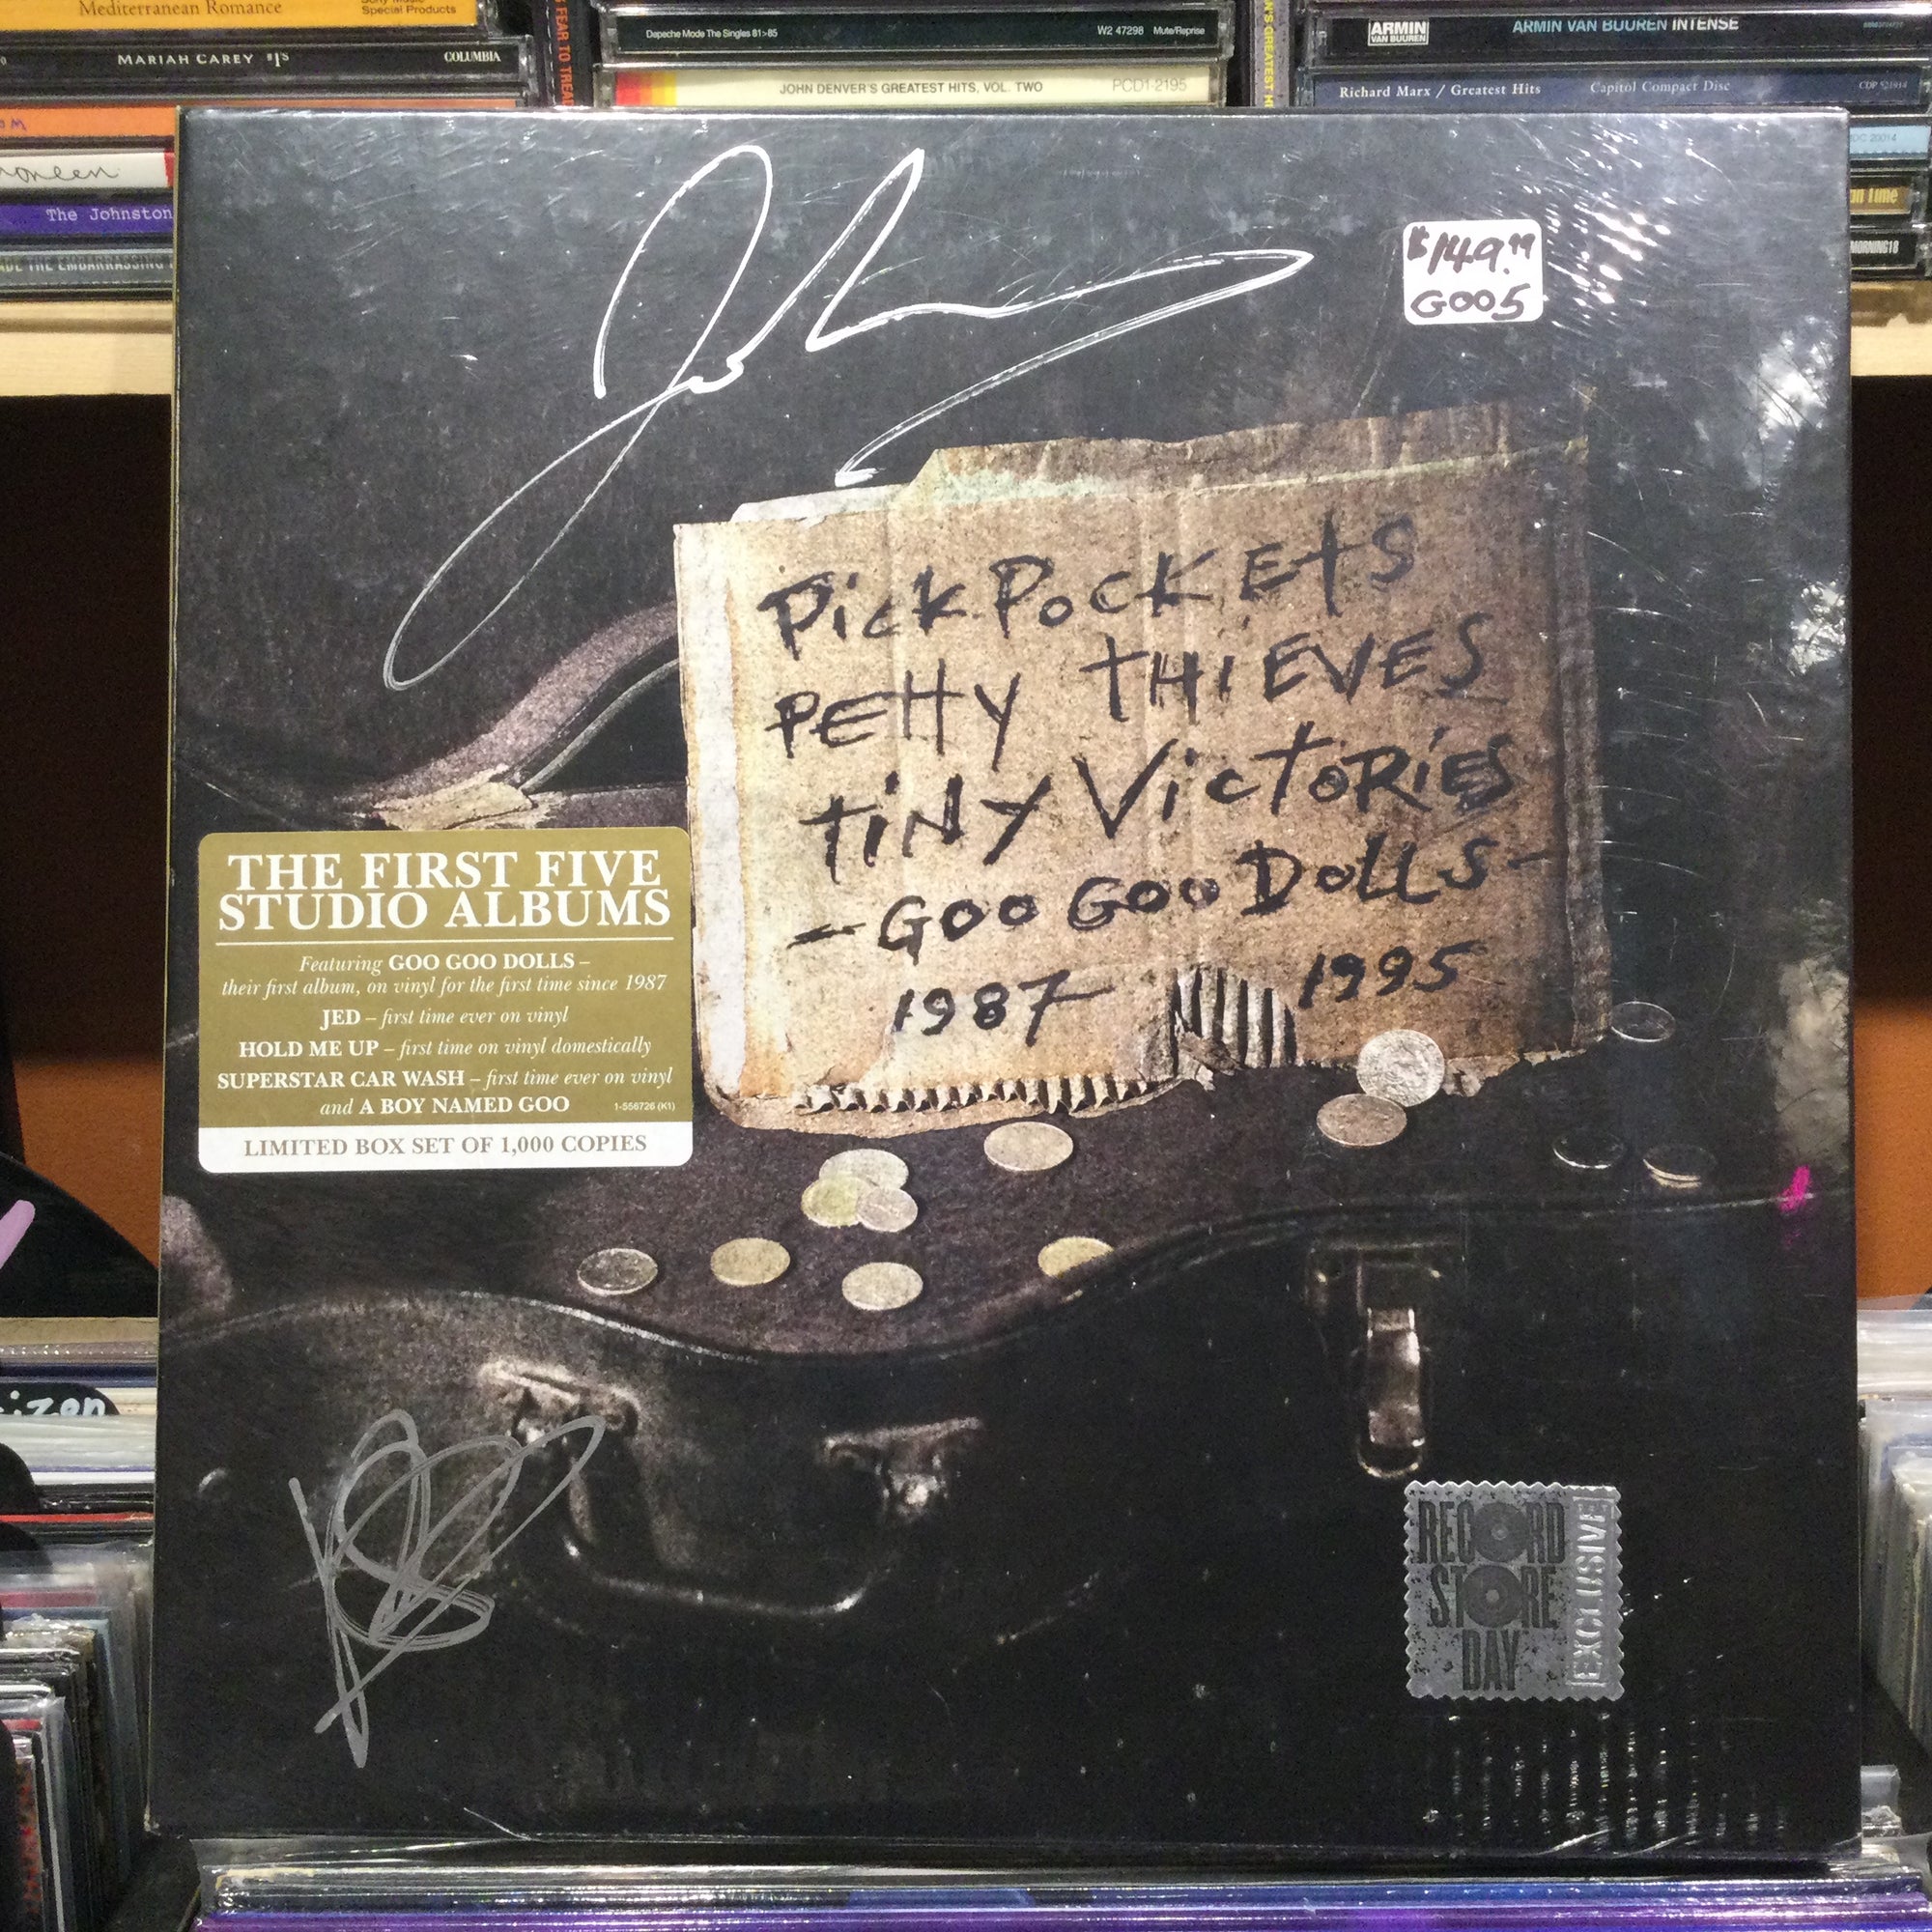 Goo Goo Dolls - Pick Pockets, Petty Thieves Tiny Victories (Vinyl 5LP Boxset) Signed